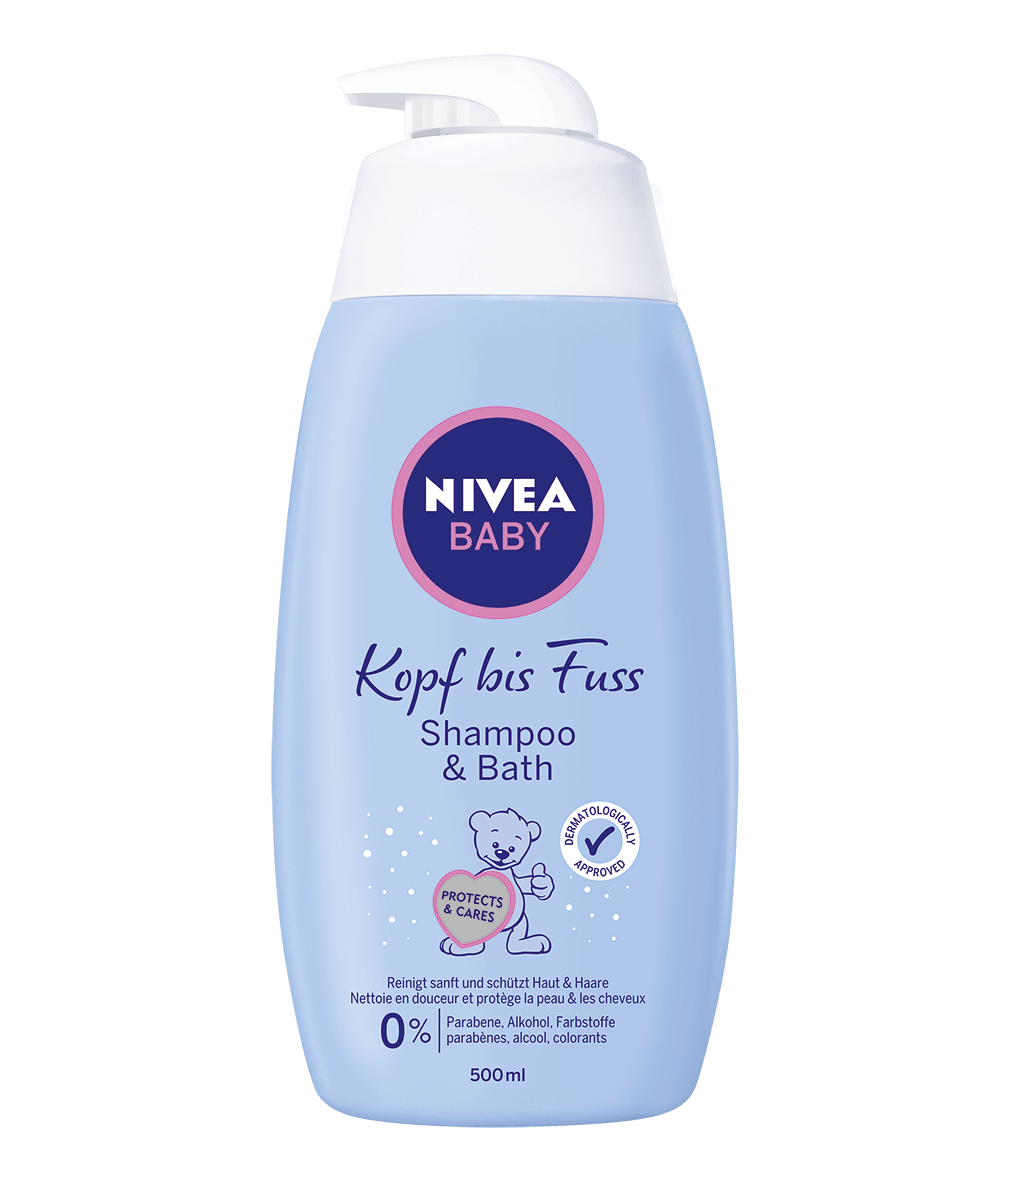 NIVEA Baby Kopf bis Fuß Shampoo & Bath